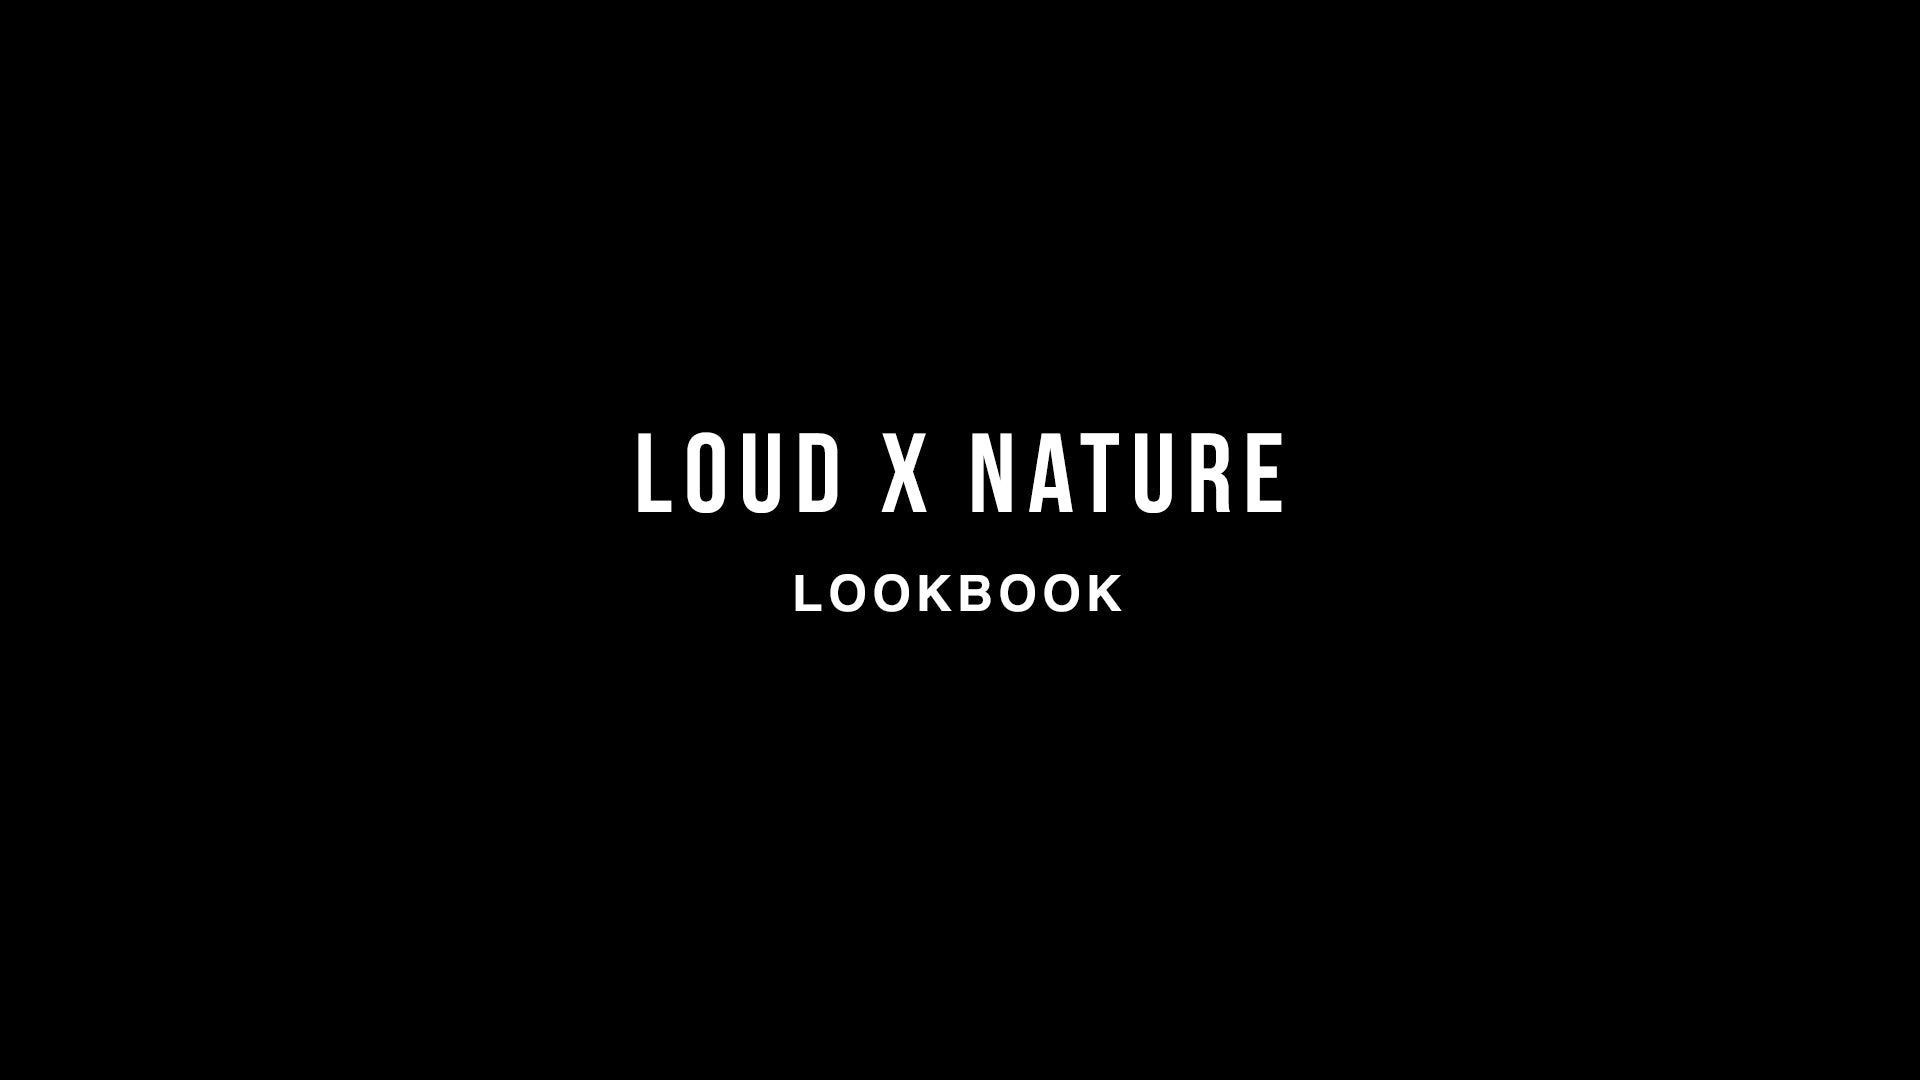 LOUD X NATURE LOOKBOOK